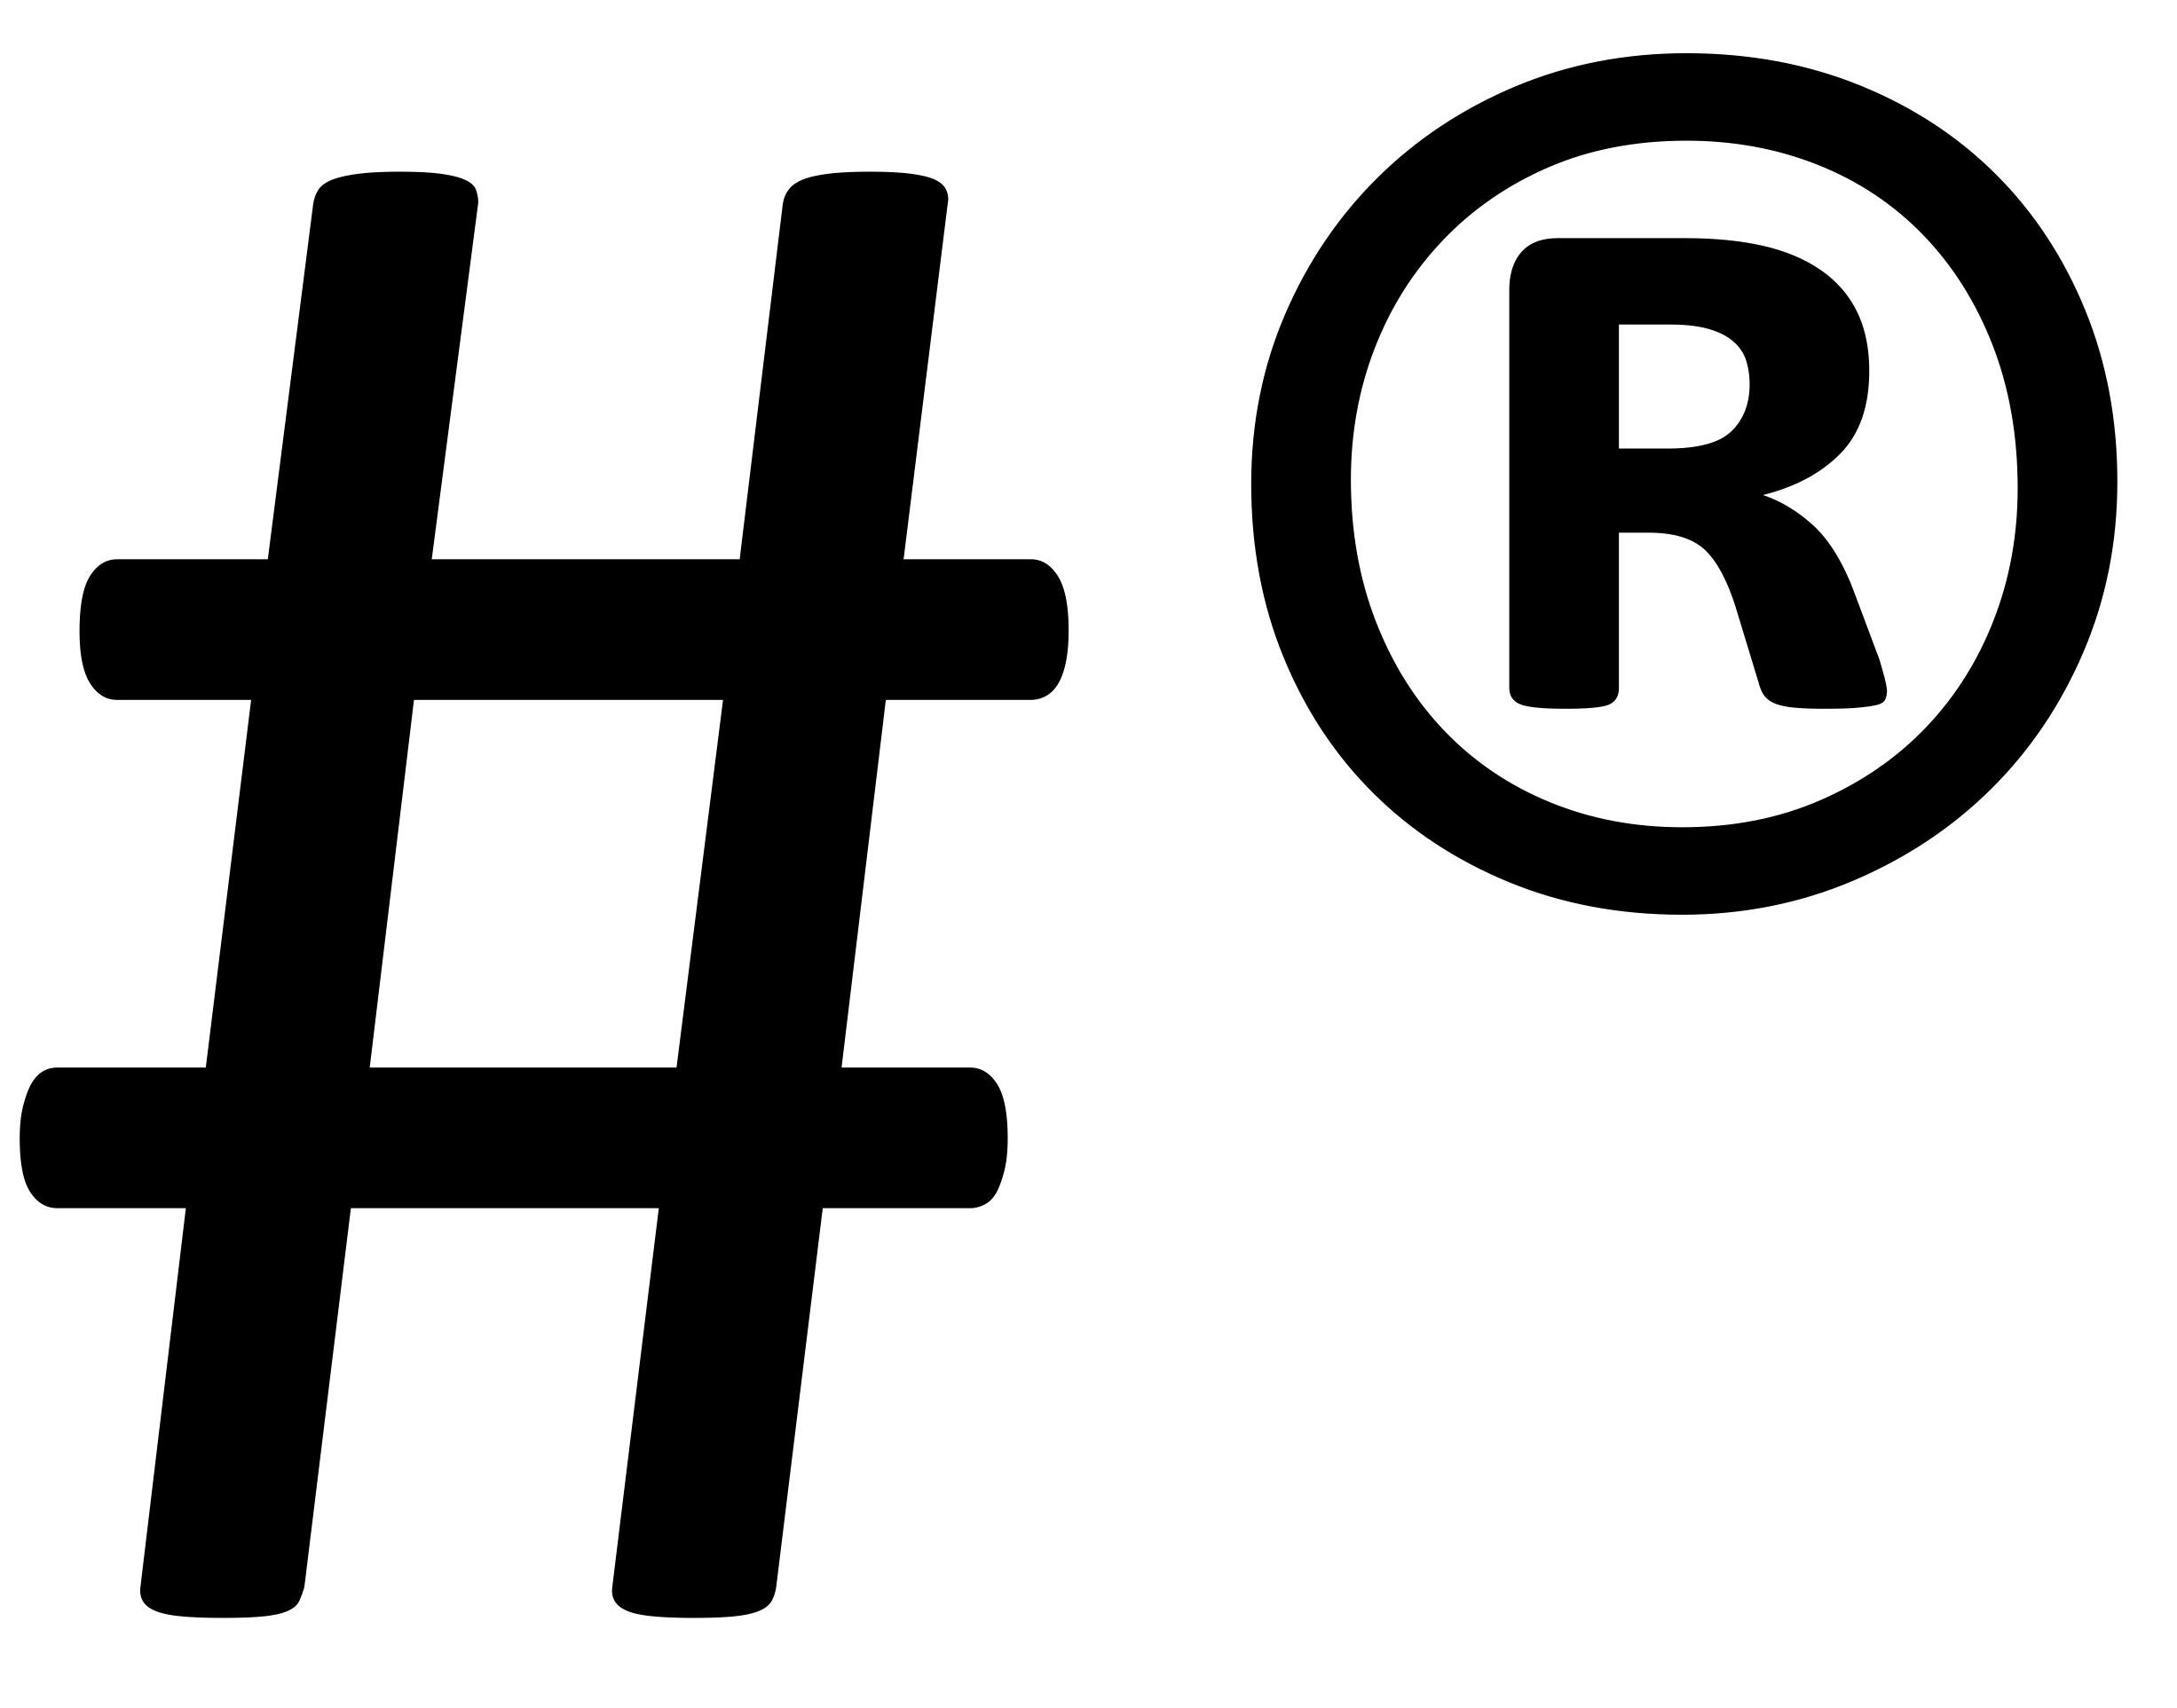 Hashtag trademark